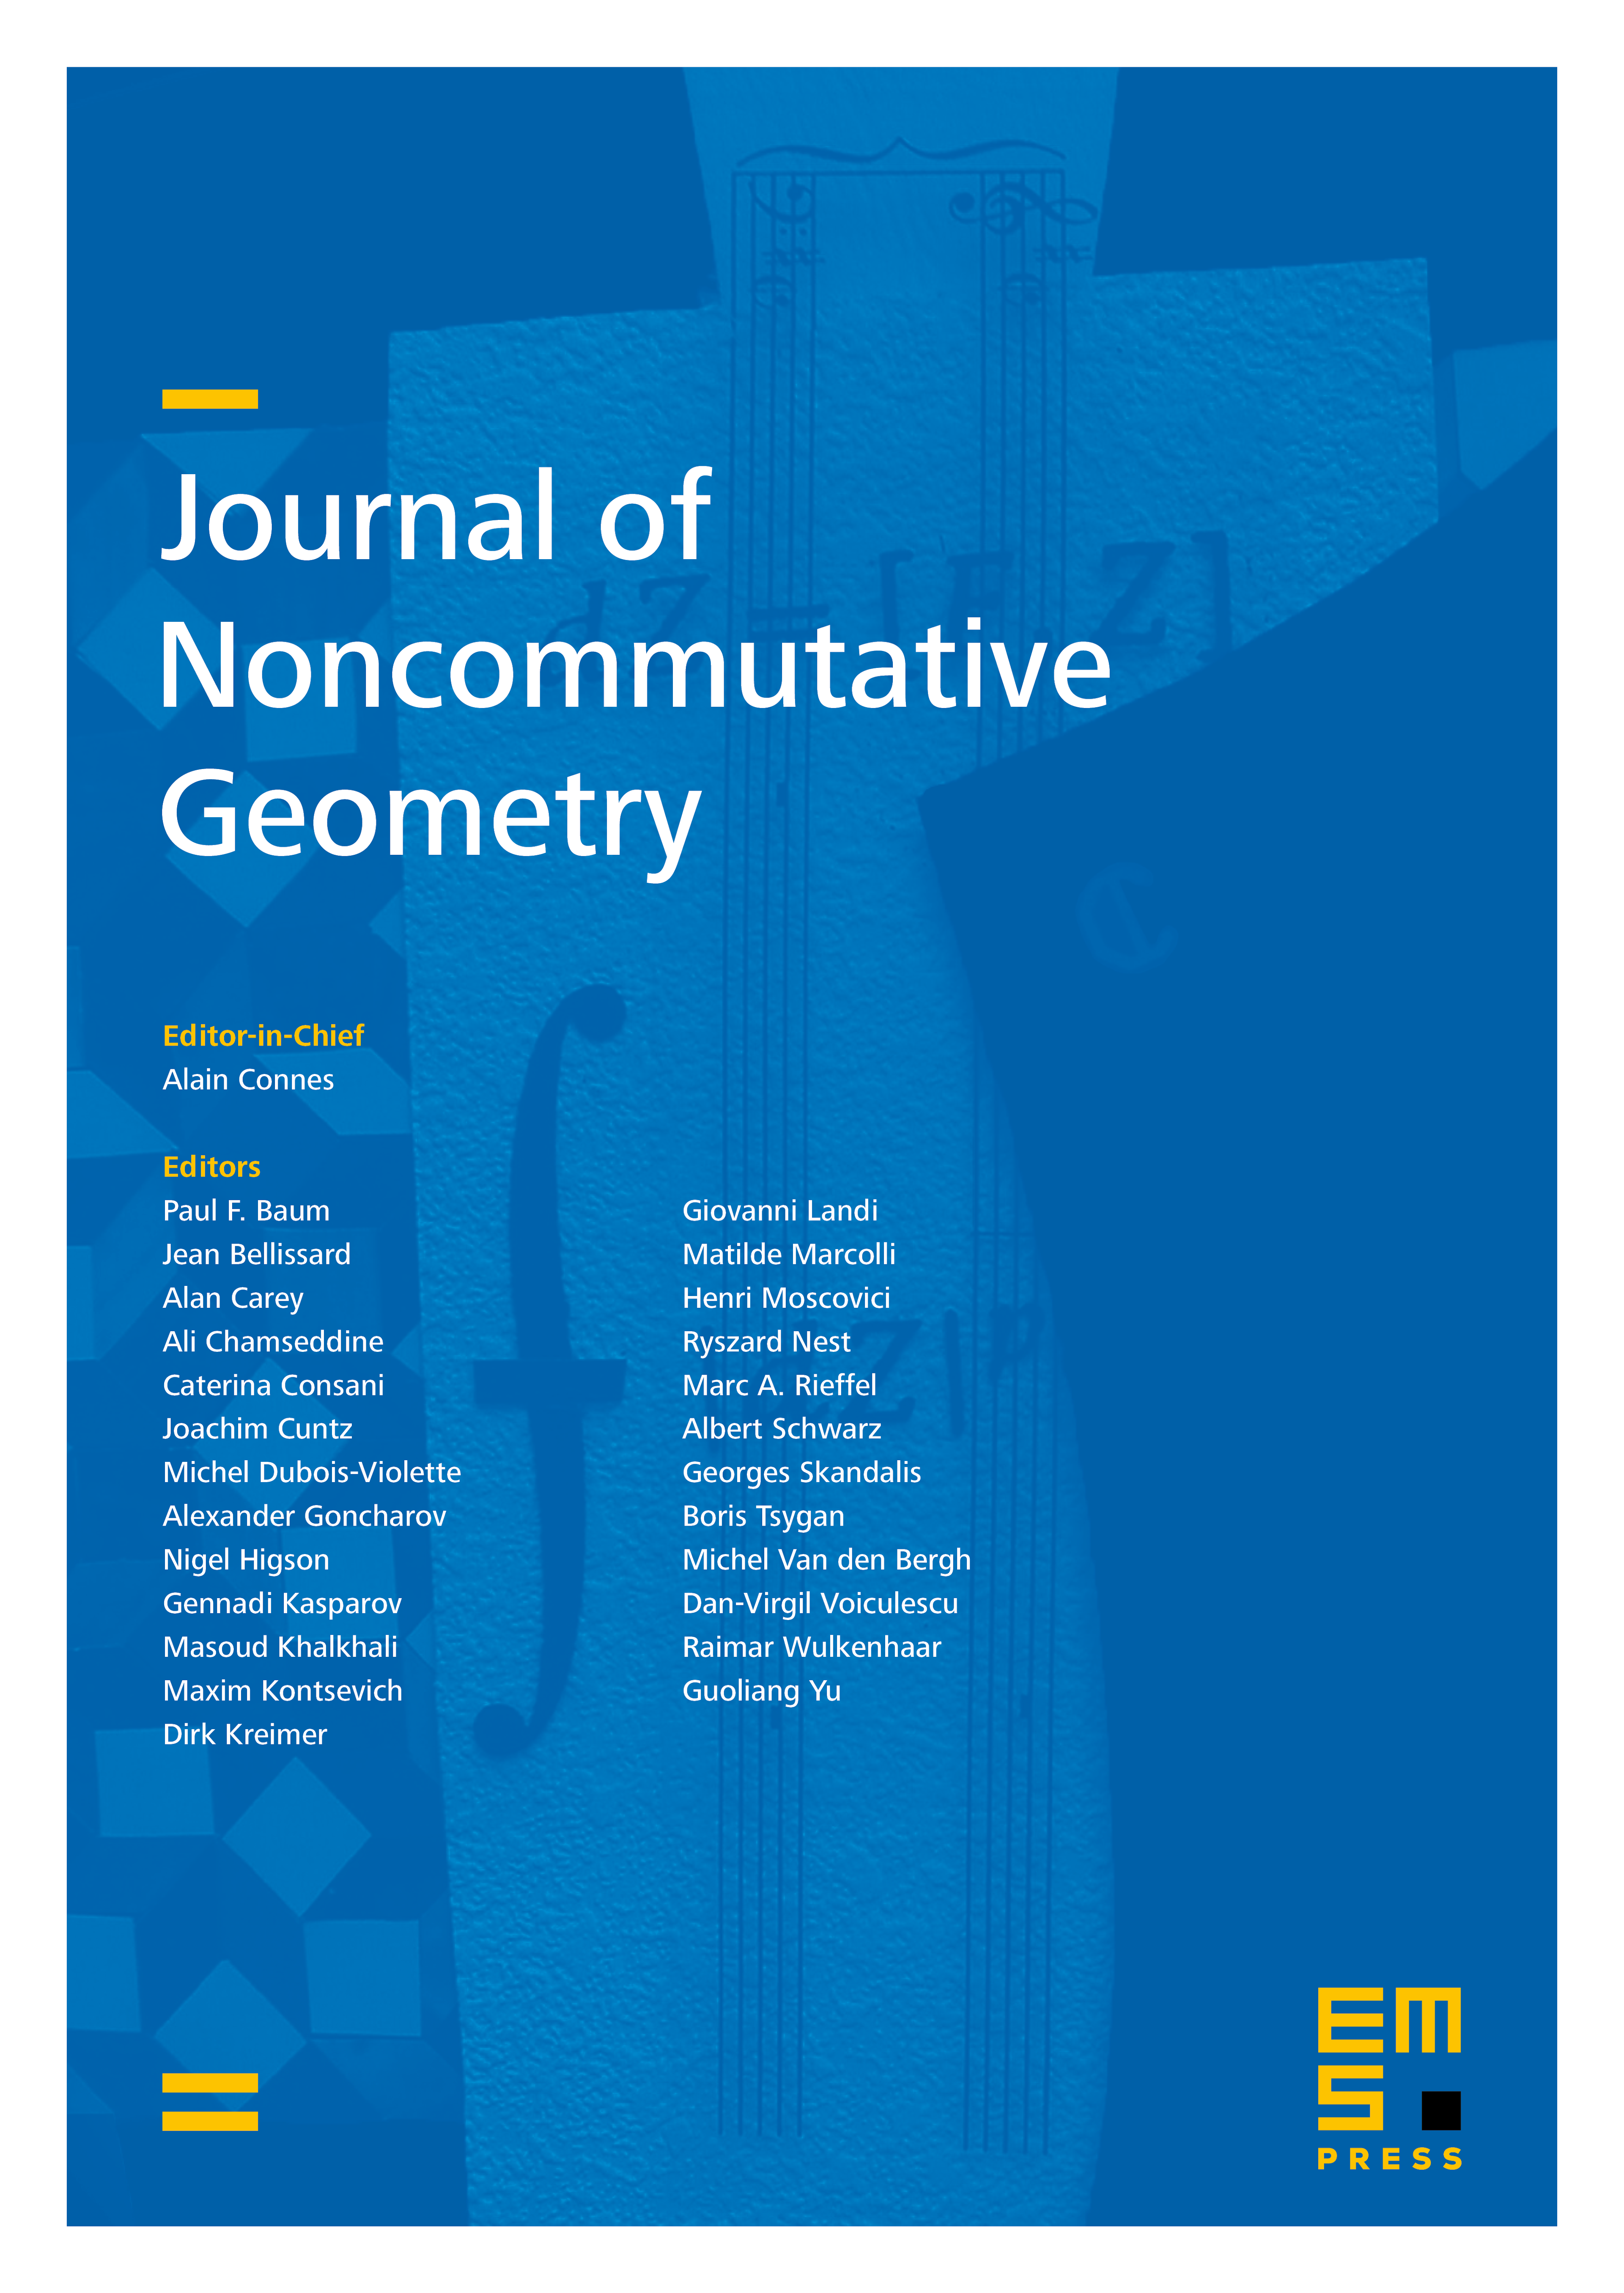 J. Noncommut. Geom. cover